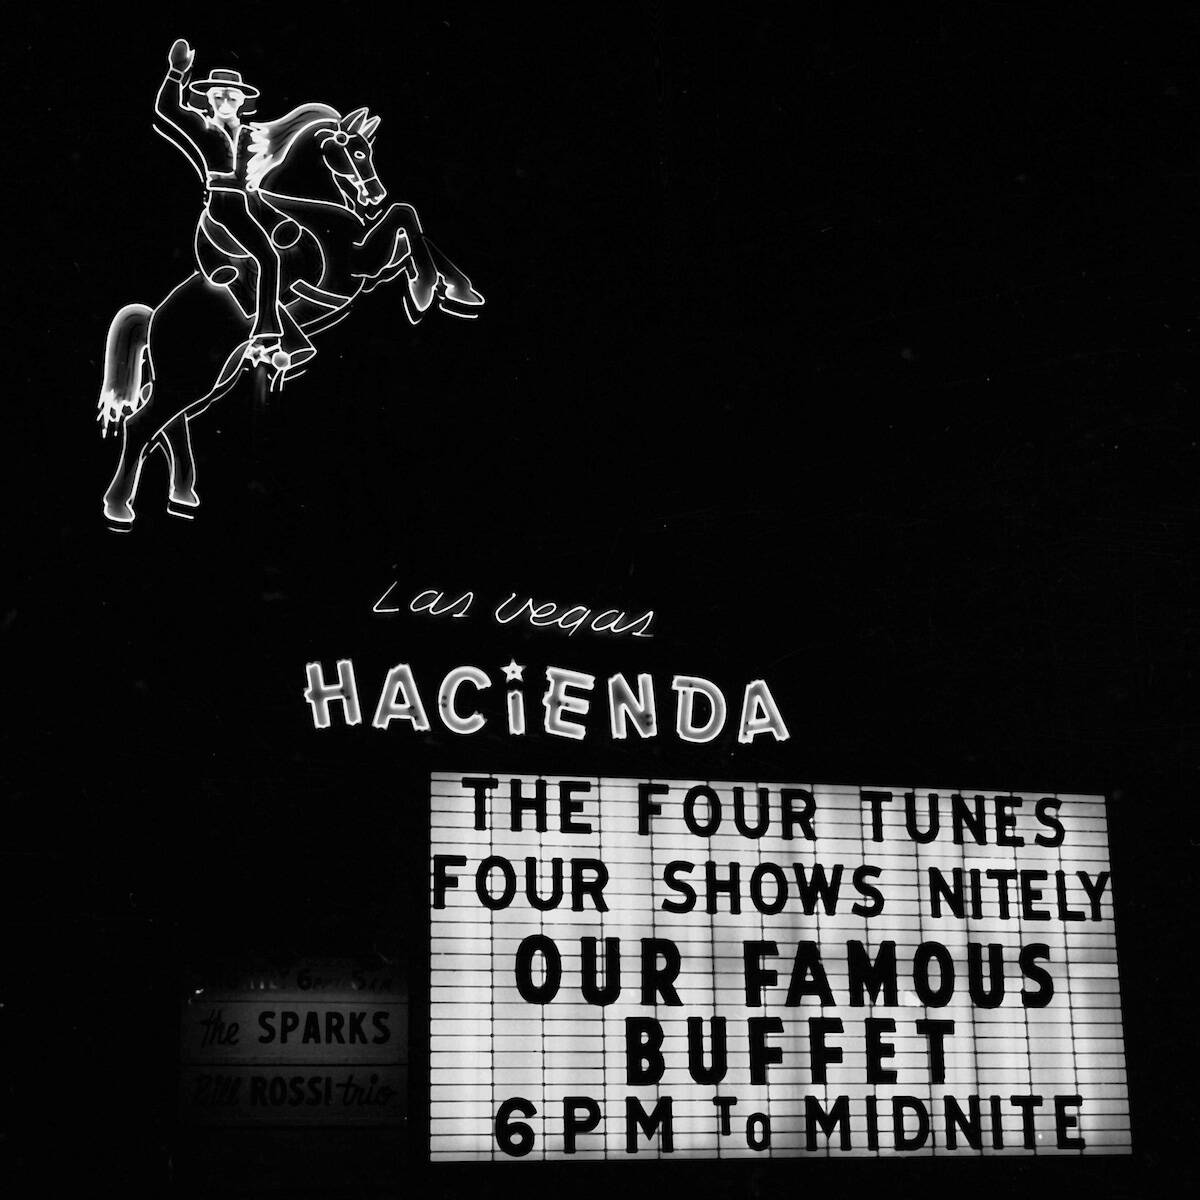 The Hacienda touts The Four Tunes and its Famous Buffet on Dec. 31, 1955. (Las Vegas News Bureau)